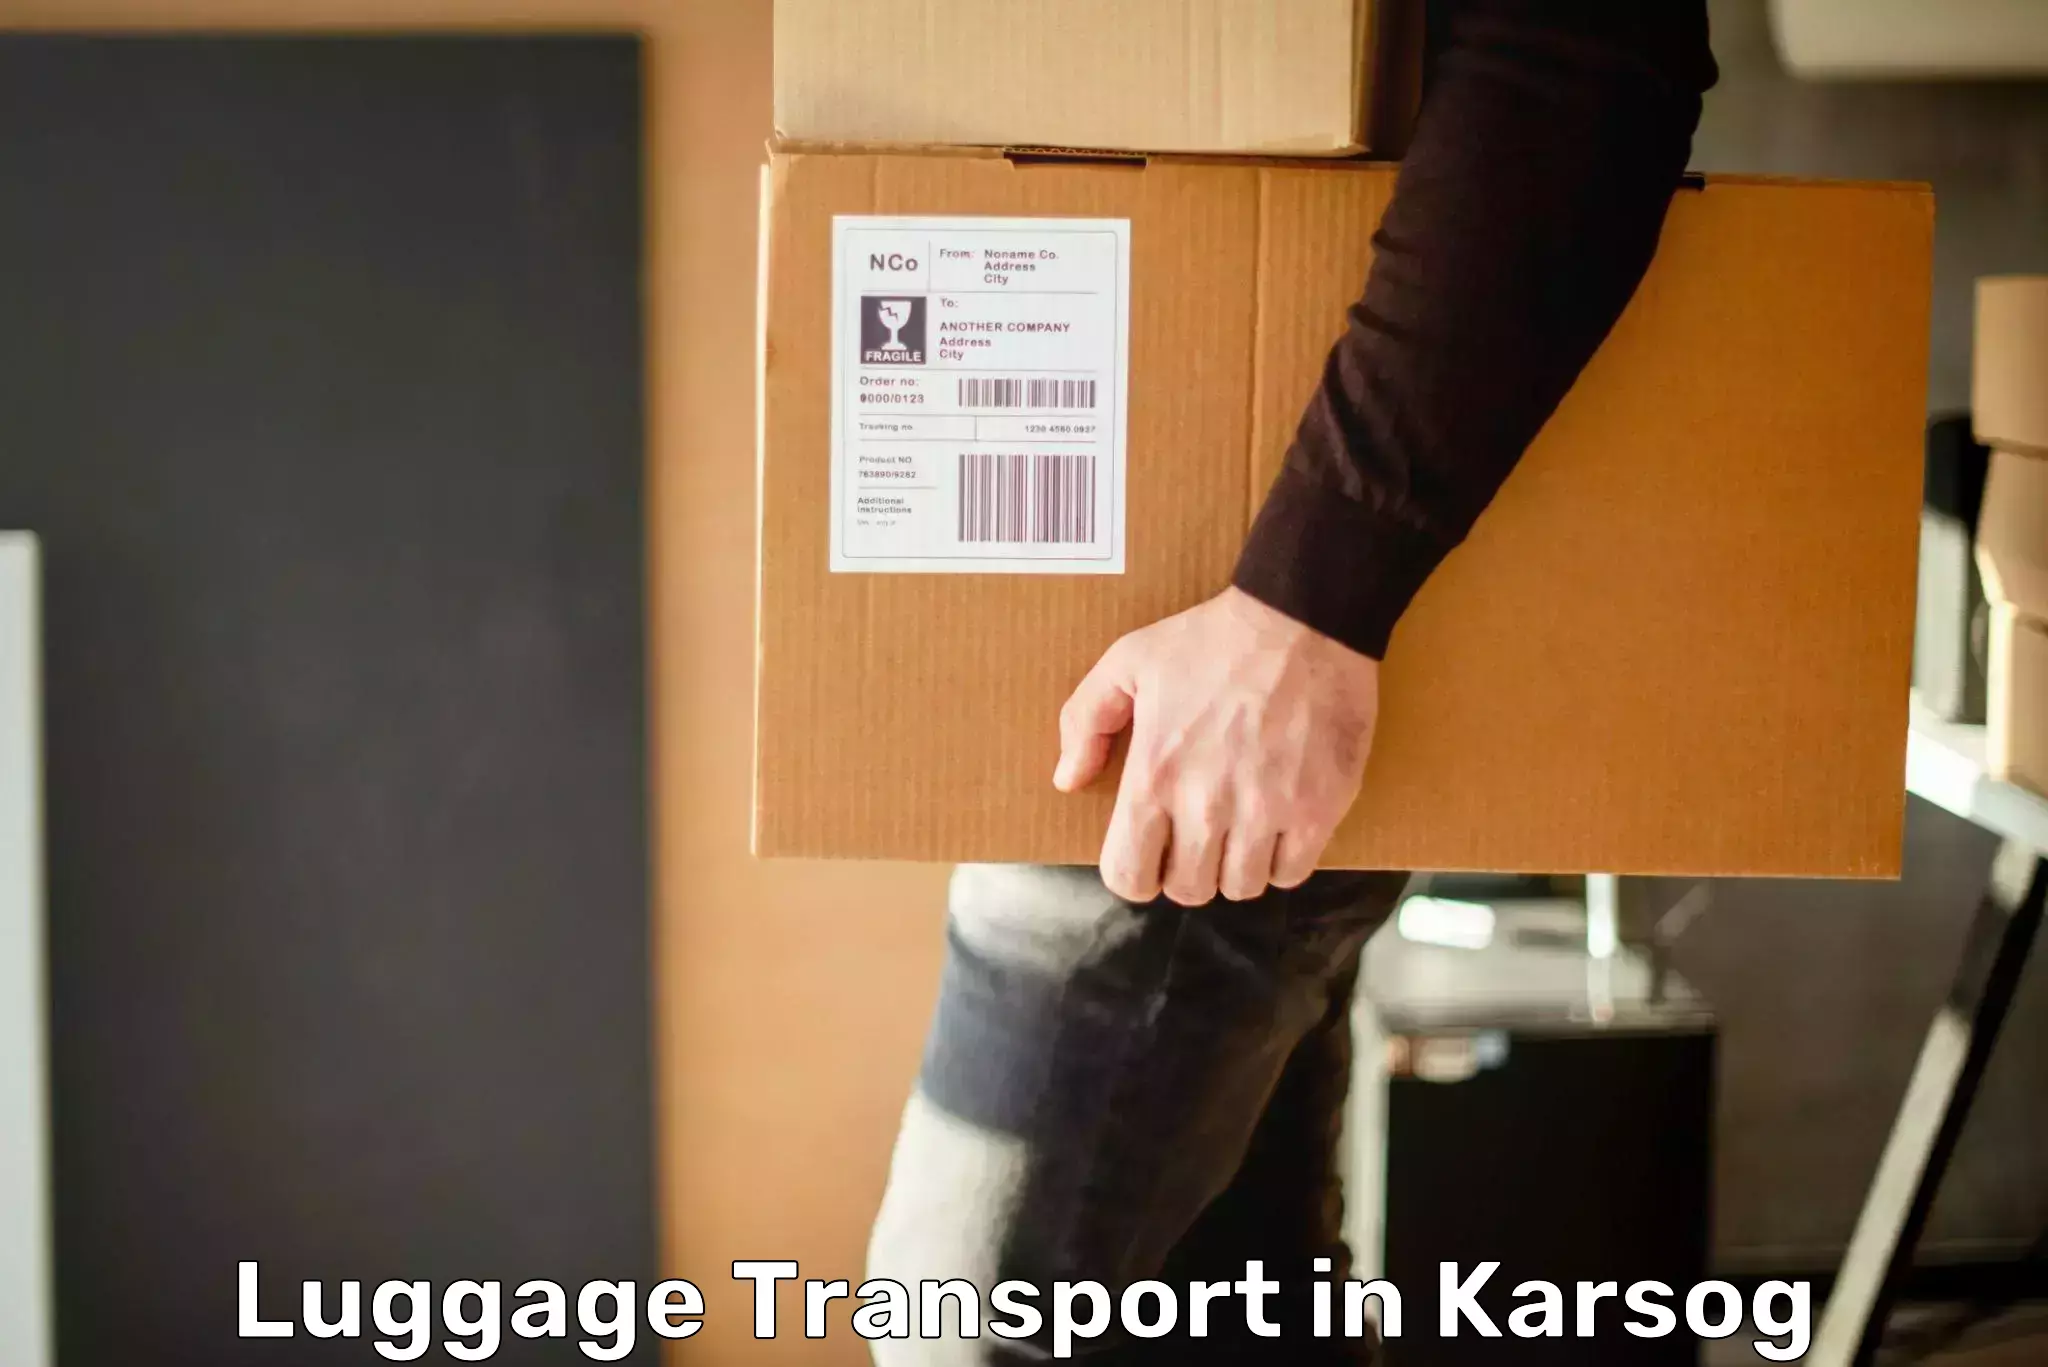 Baggage relocation service in Karsog